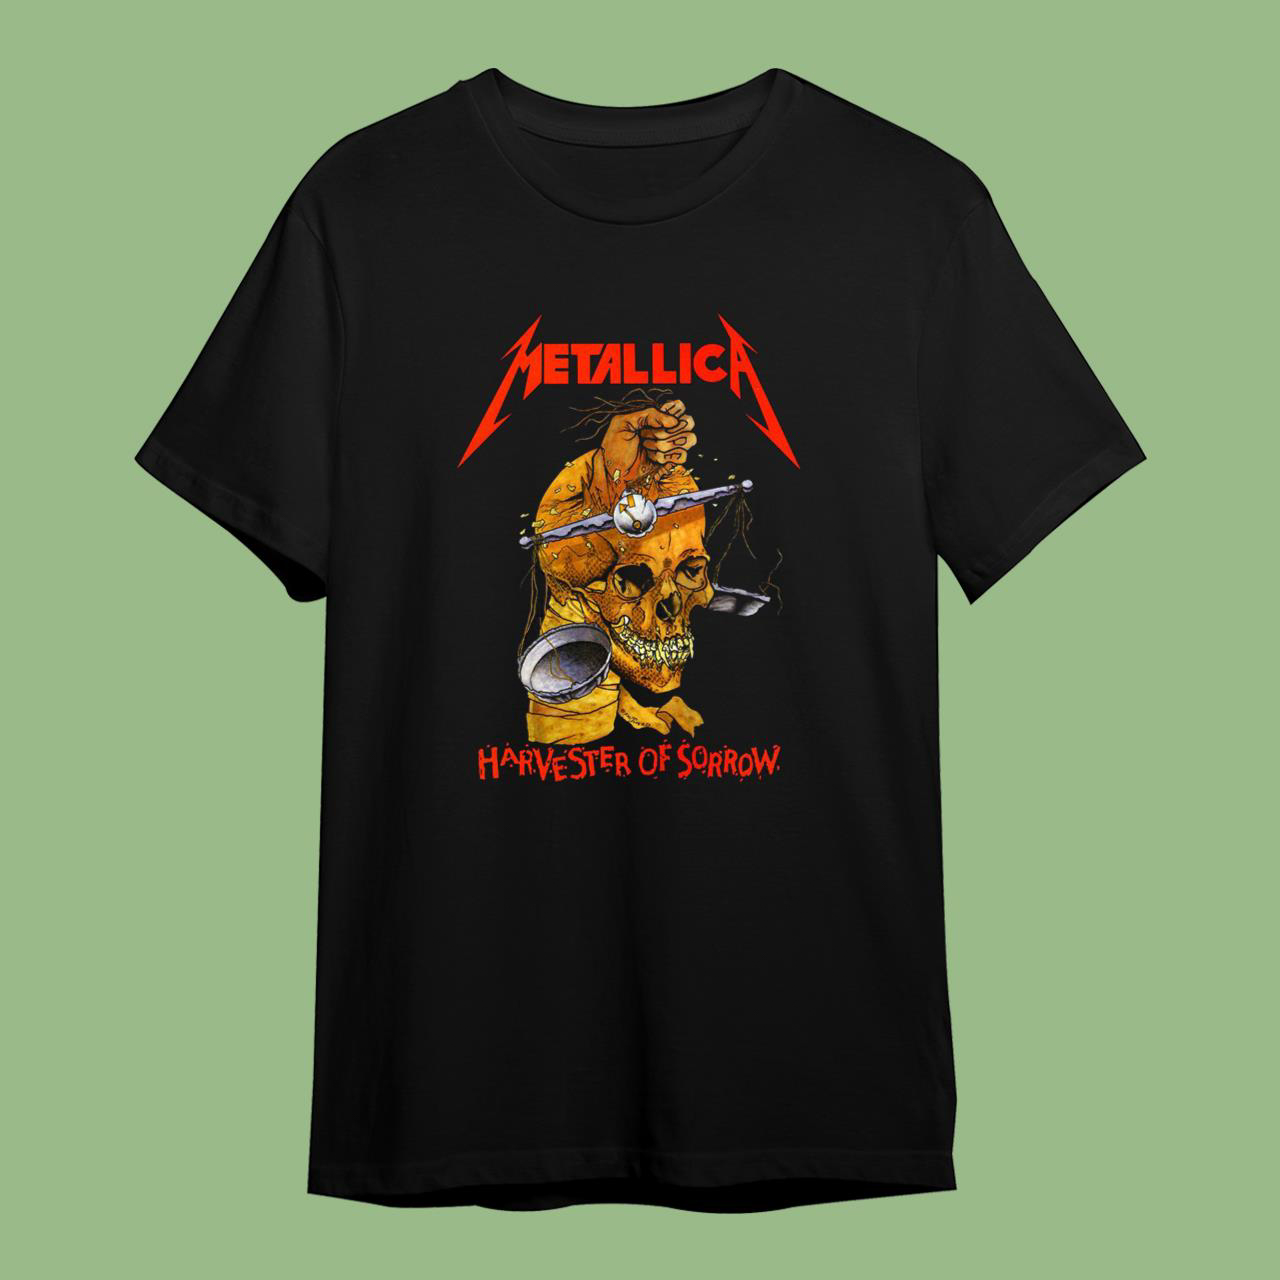 Metallica Harvester Of Asorrow T-Shirt